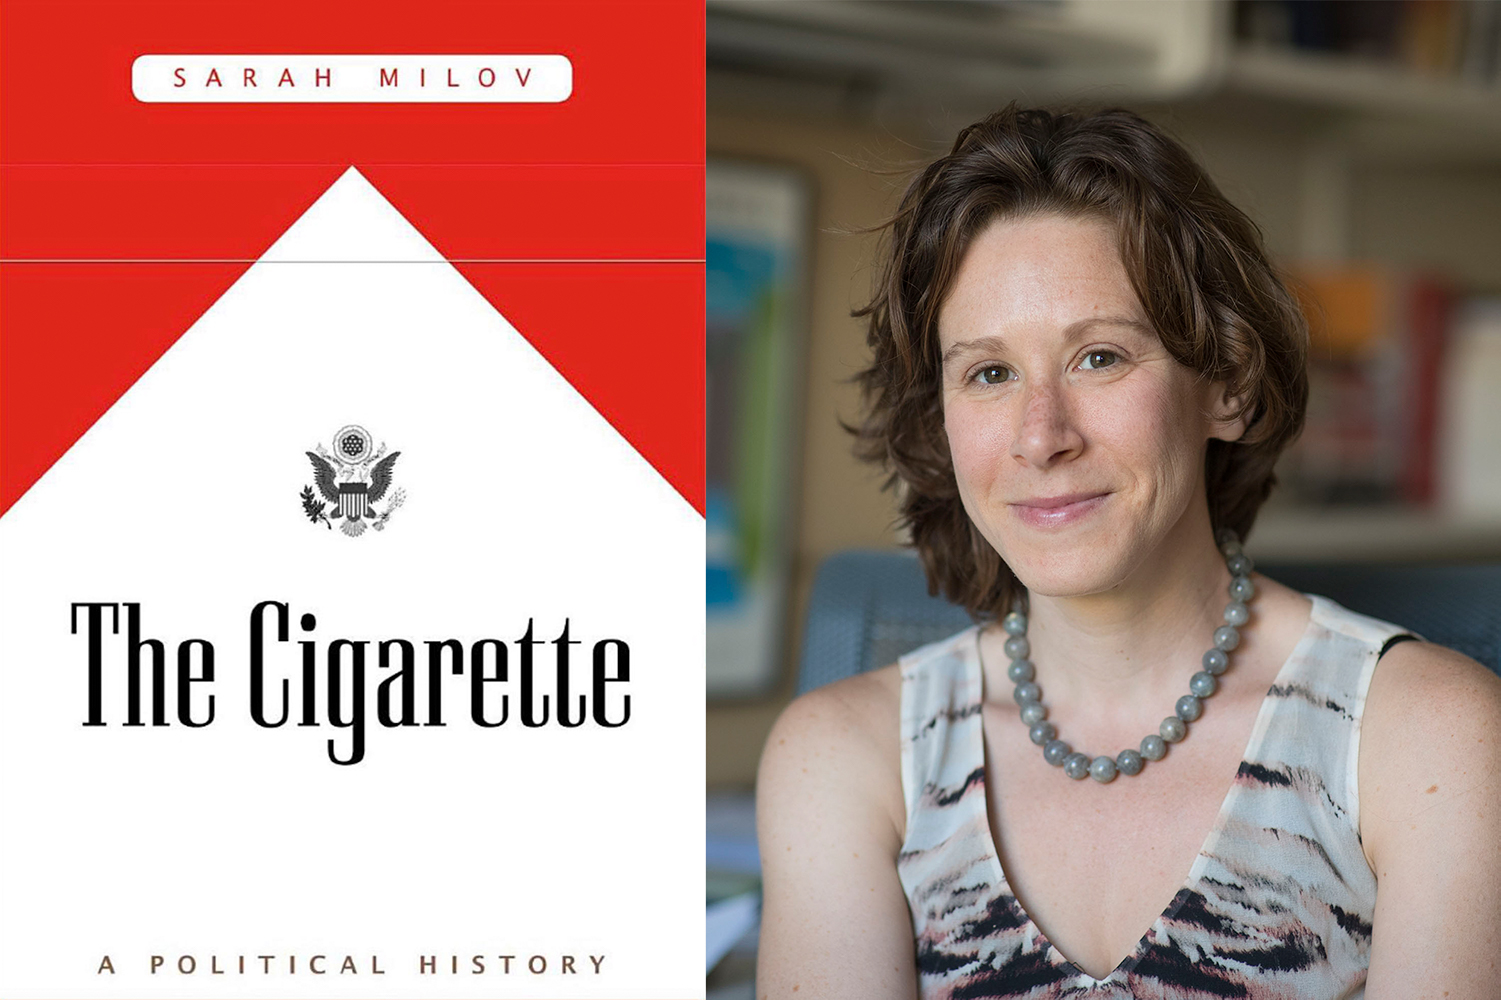 Left: book cover: The Cigarette: A Political History. Right: Sarah Milov headshot